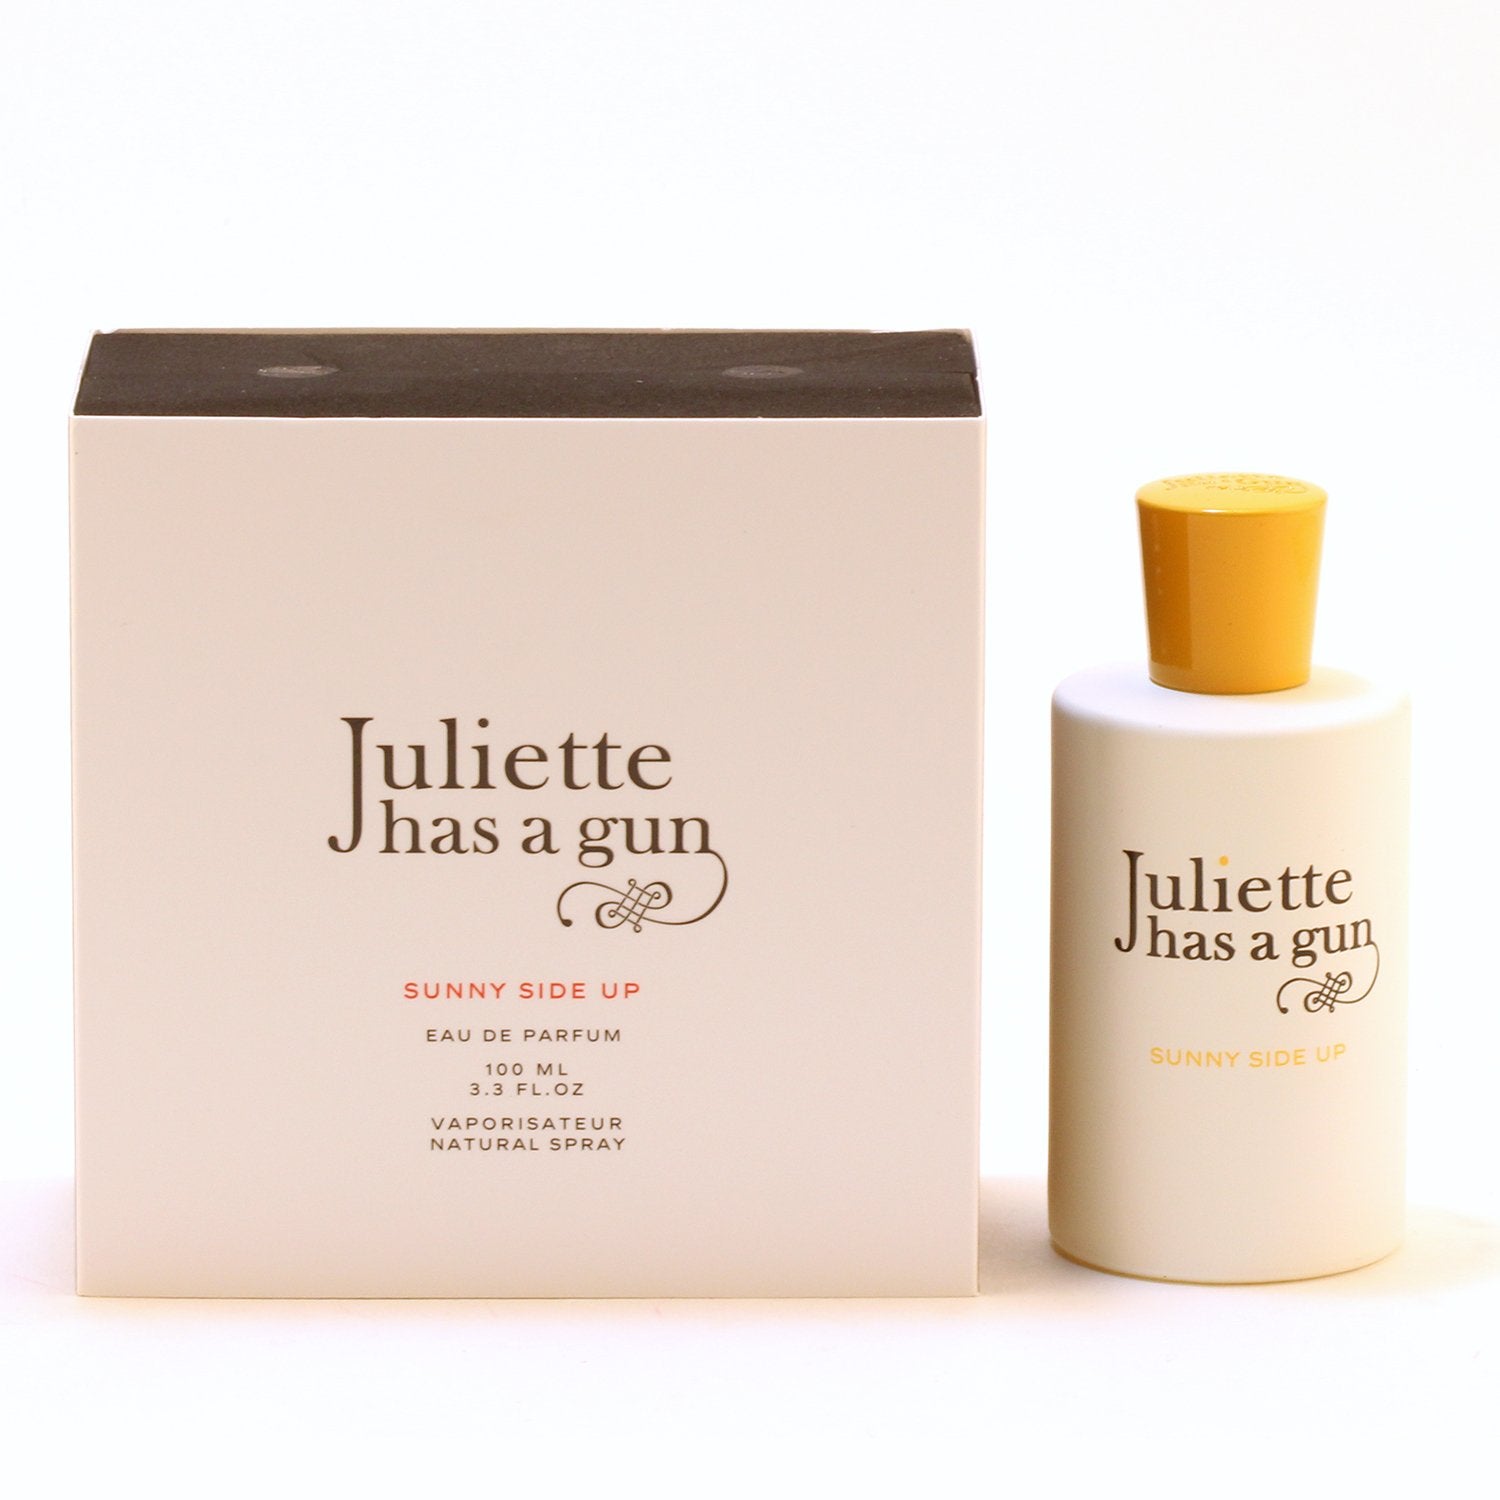 Perfume - JULIETTE HAS A GUN SUNNY SIDE UP FOR WOMEN - EAU DE PARFUM SPRAY, 3.4 OZ